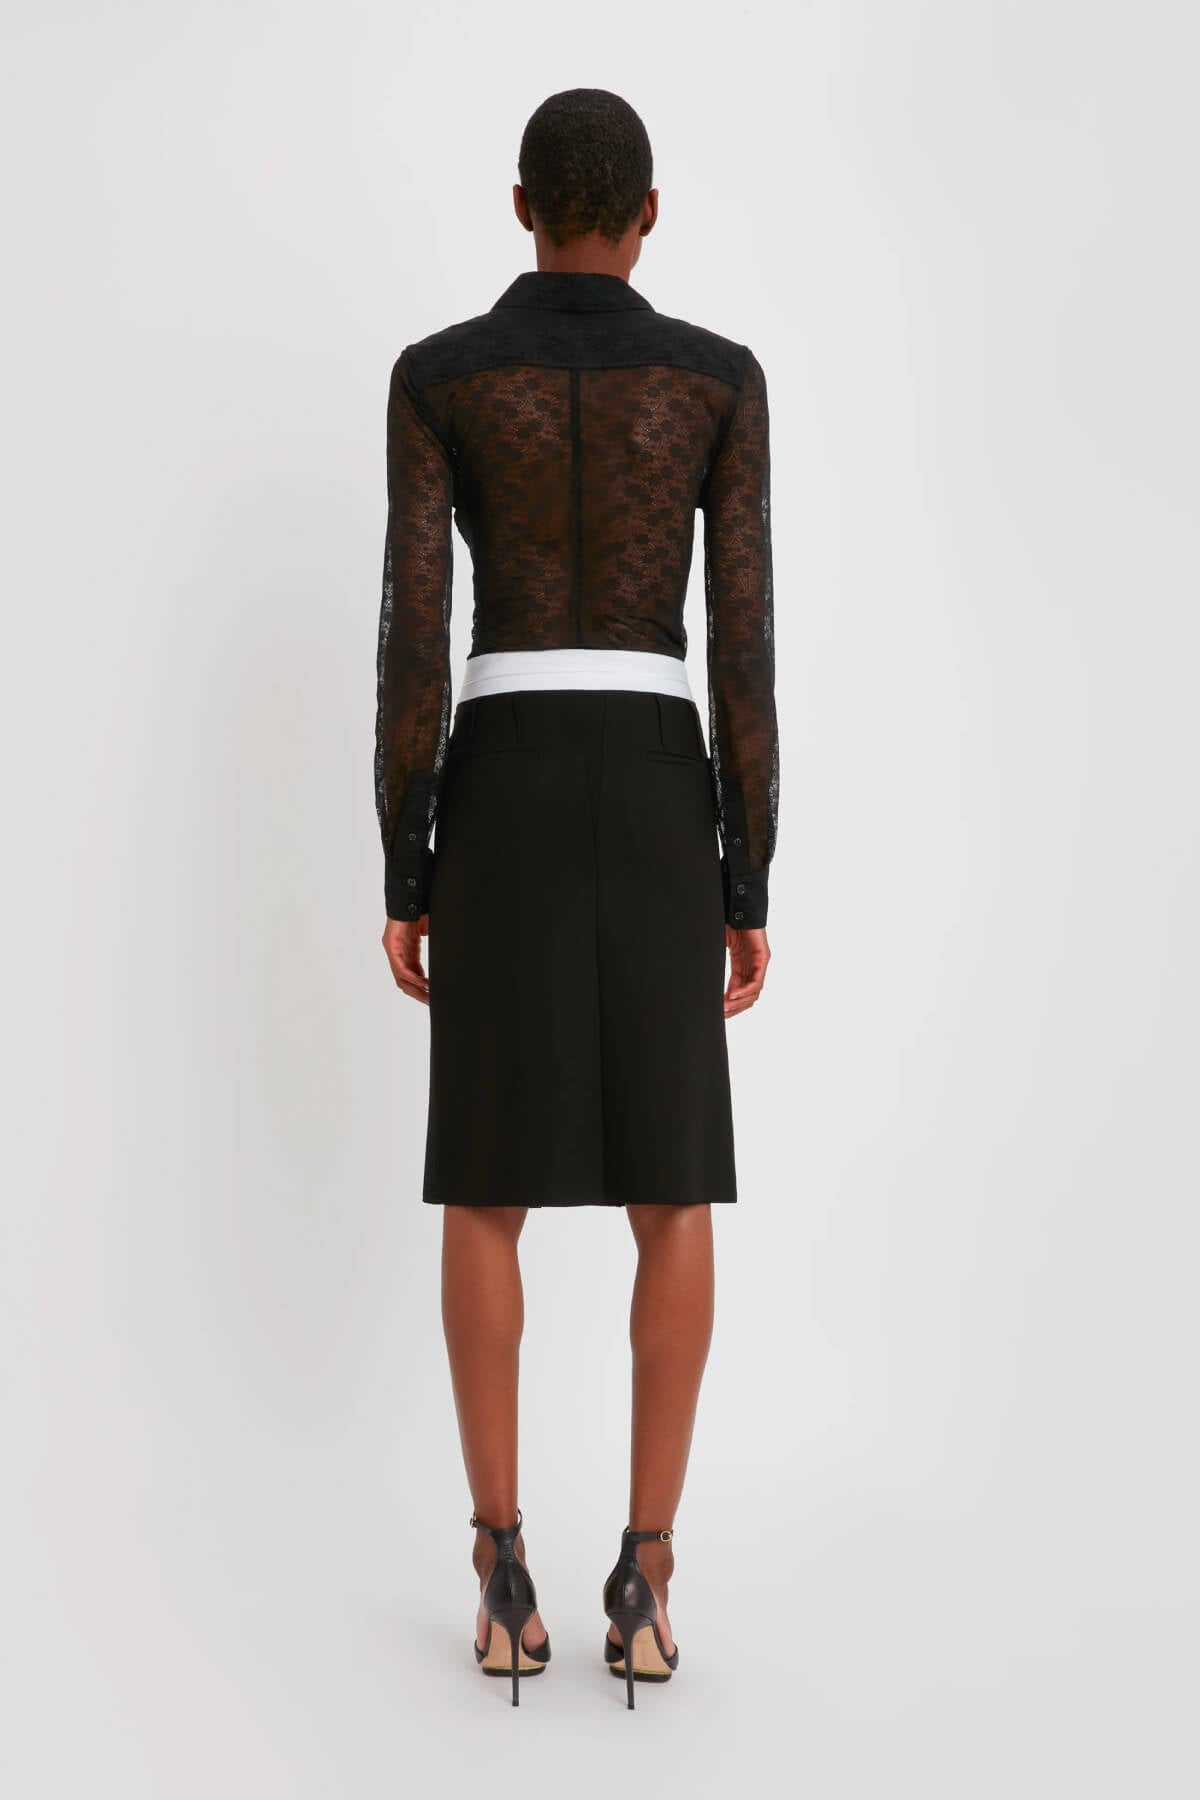 Victoria Beckham Textured Wool Tailored Inside Out Skirt - Black